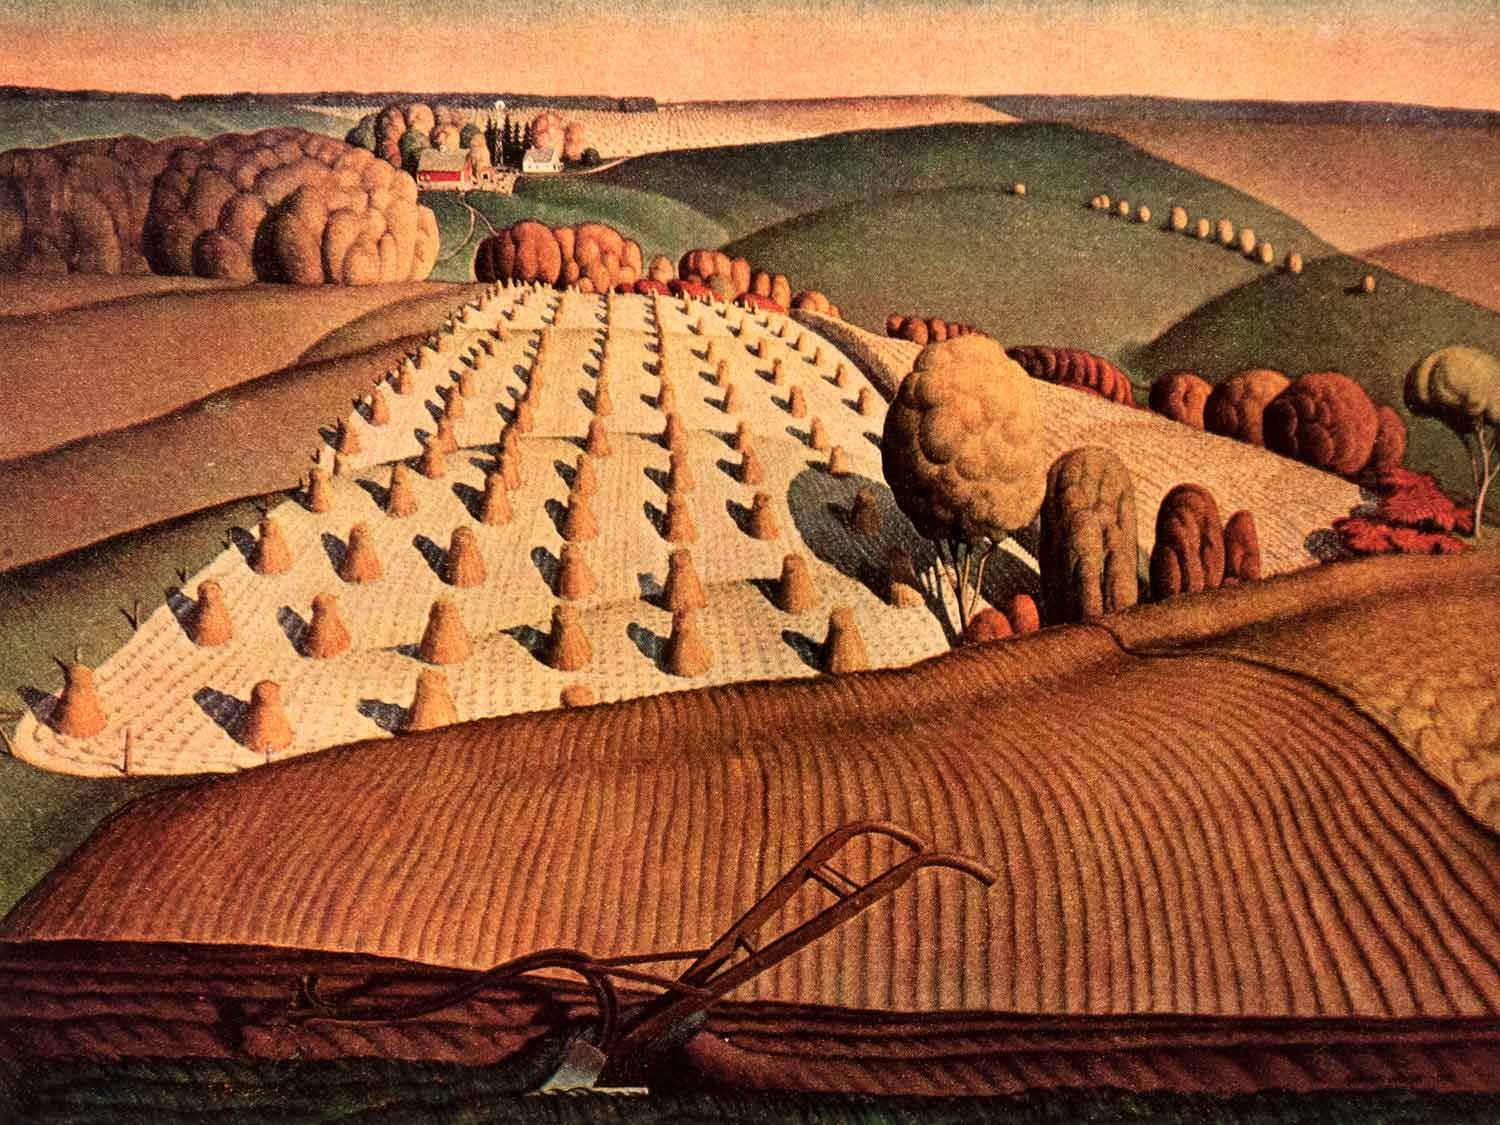    In Print Fall Plowing Grant Wood Farming Agriculture Art Regionalism